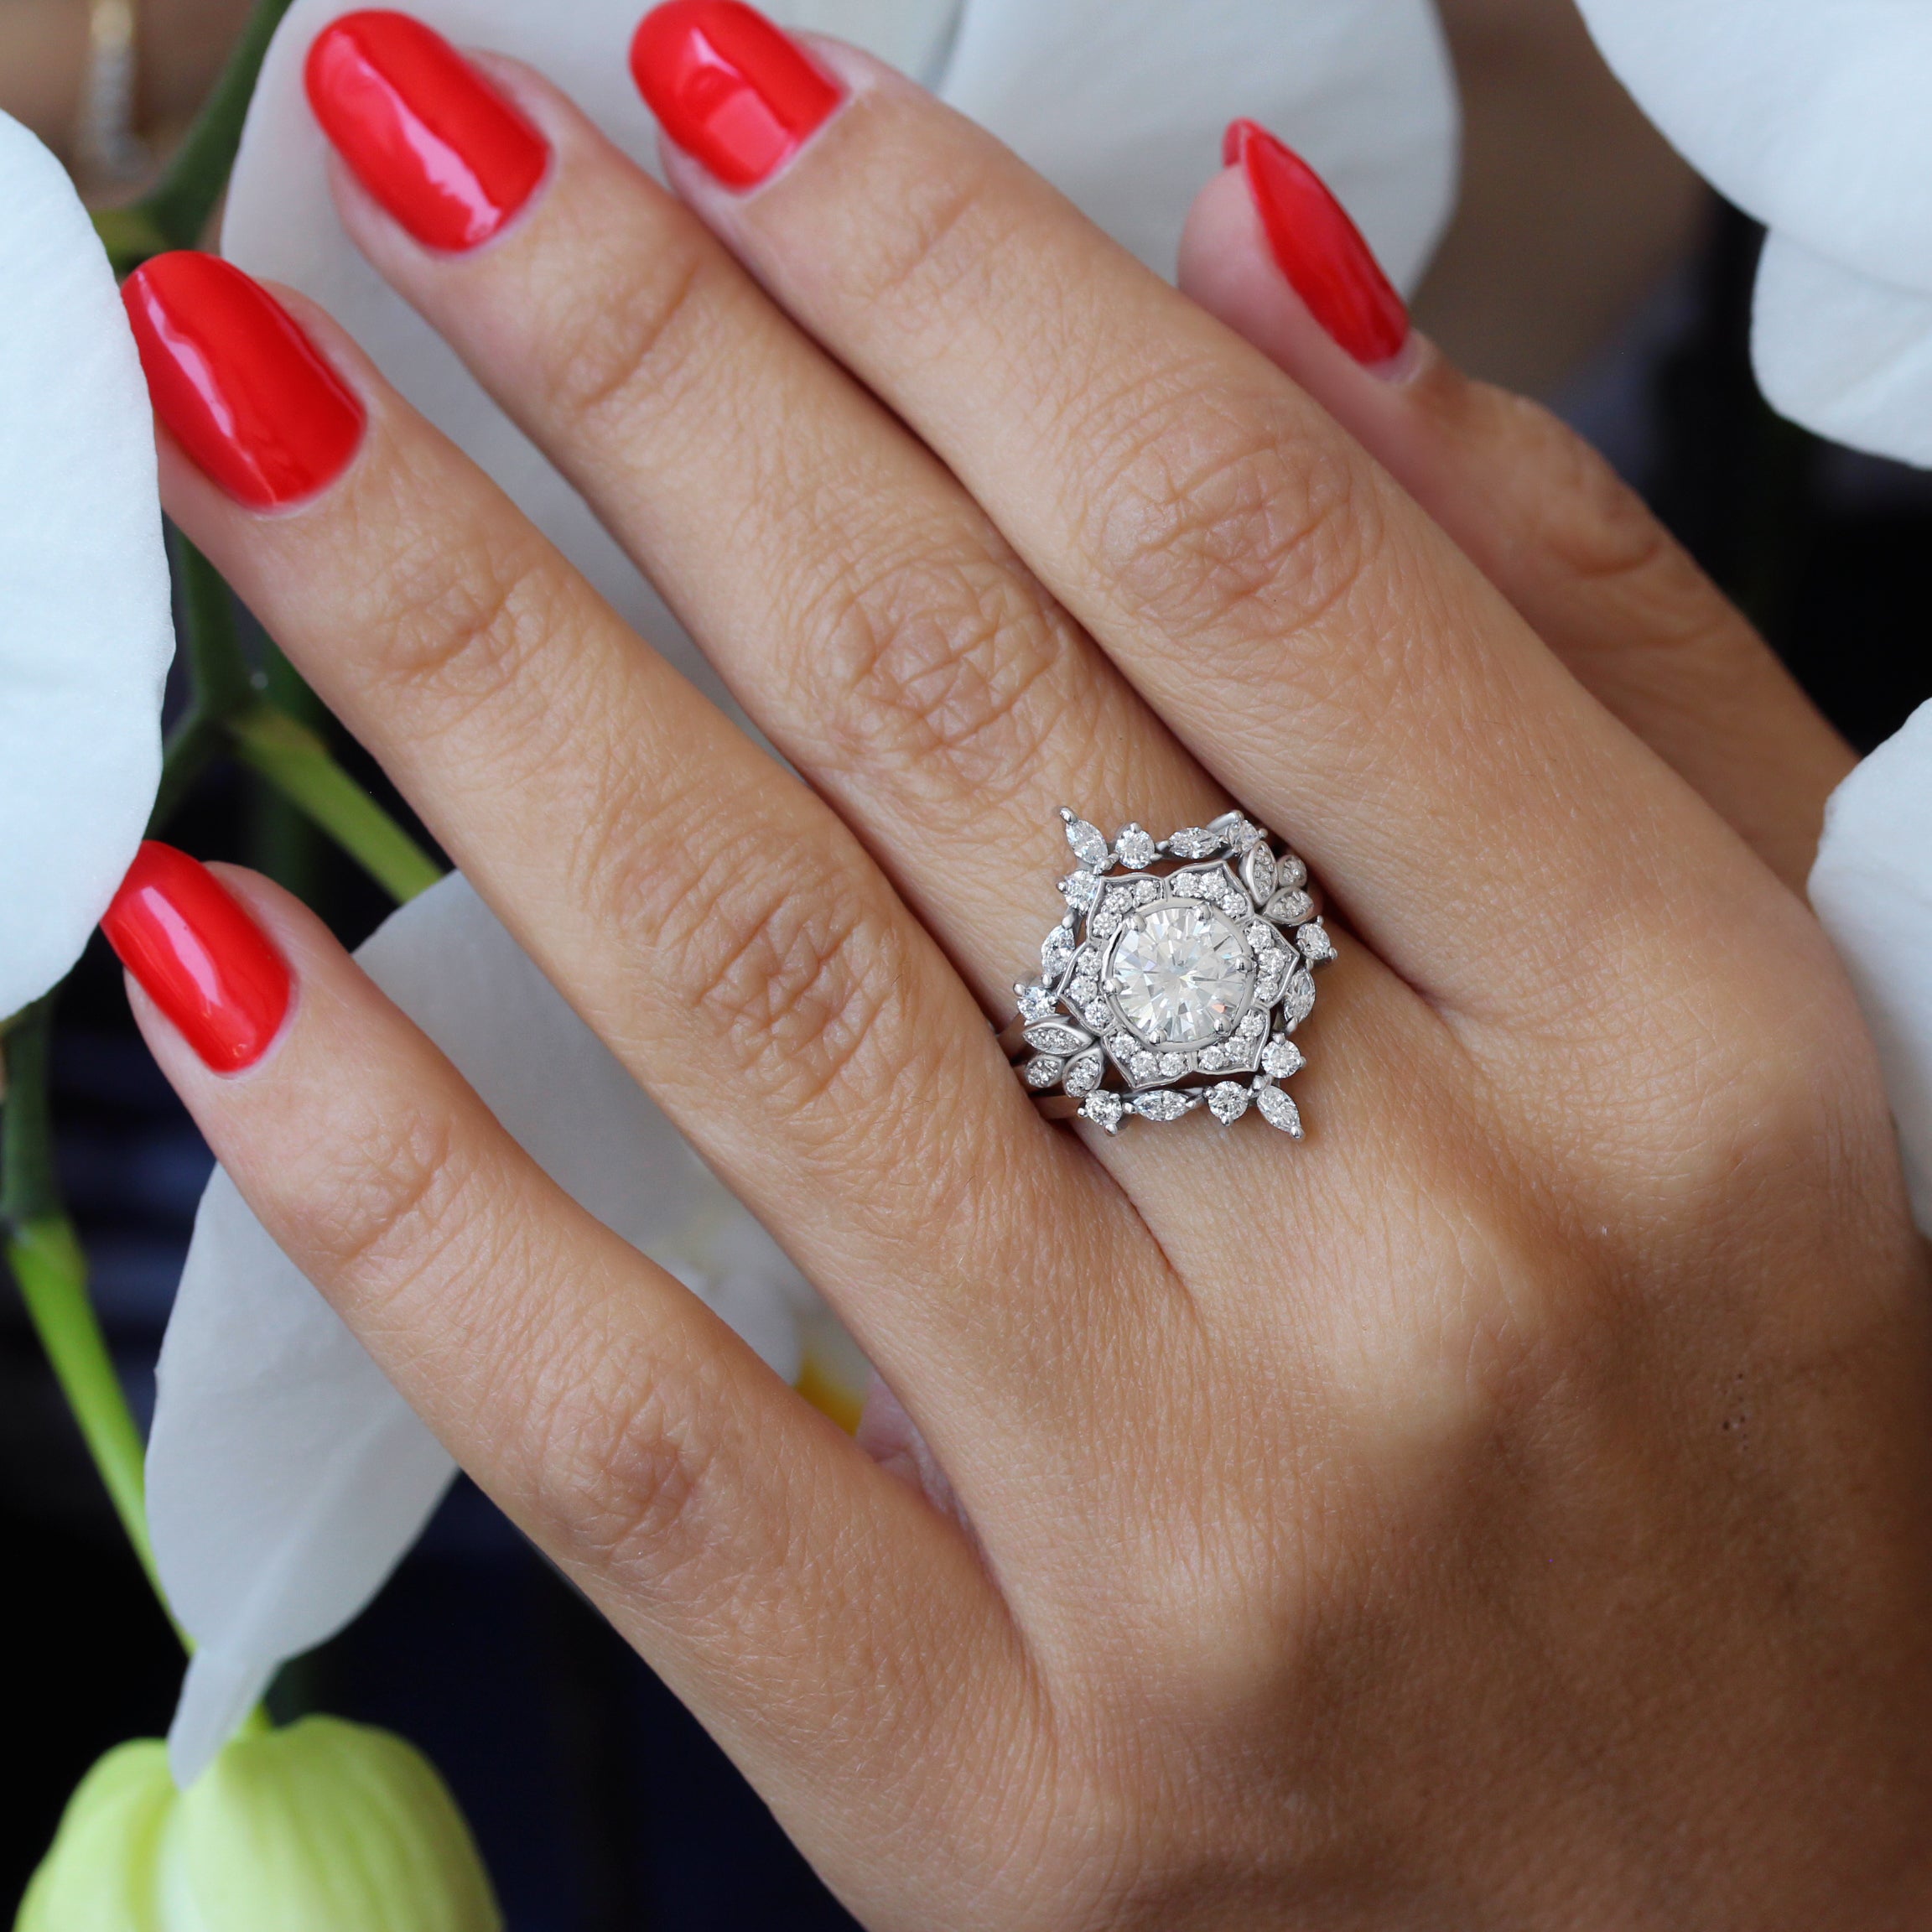 2ct Diamond Flower Engagement Ring, Three Rings Set - "Lily Pond" & "Hermes" ♥